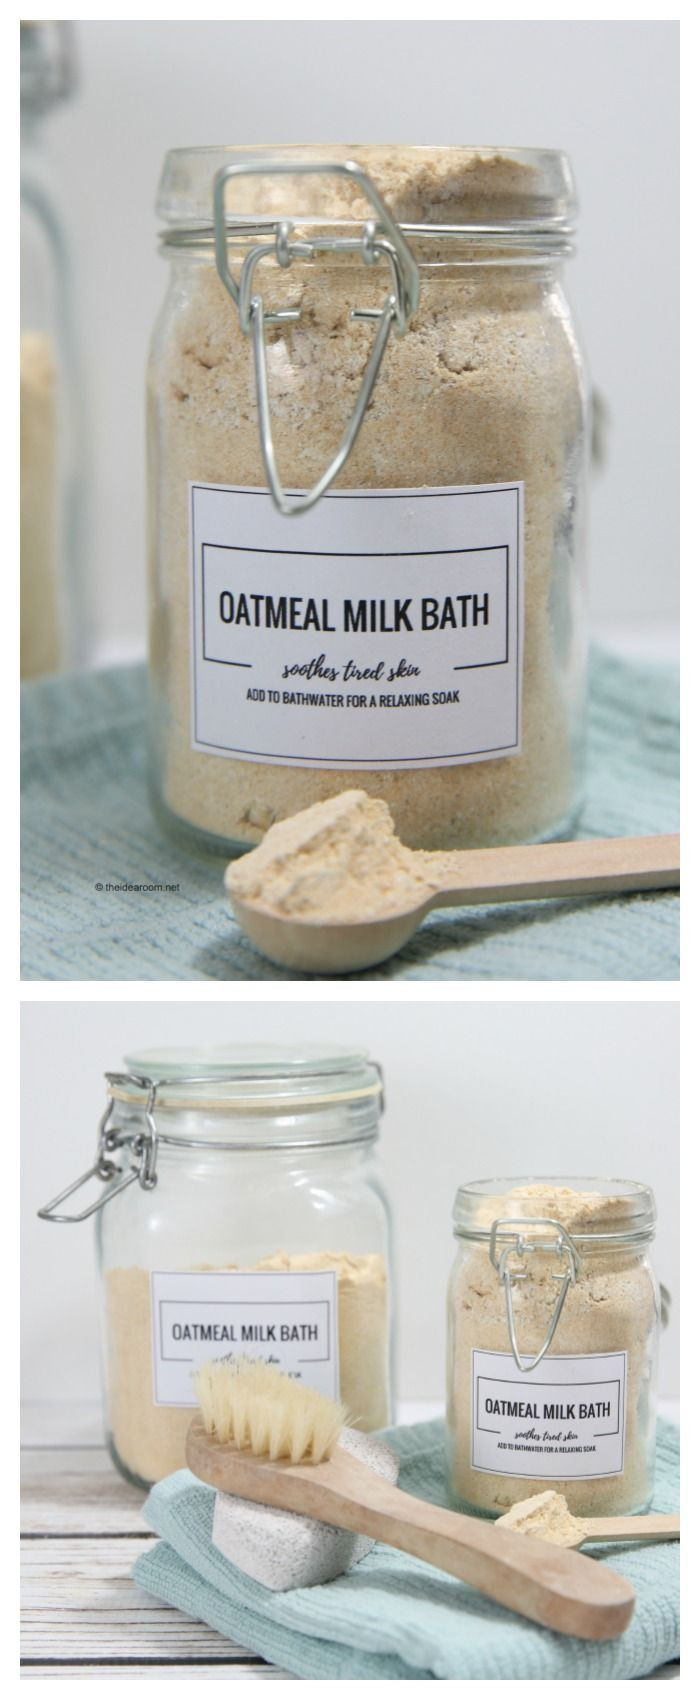 Best ideas about DIY Milk Bath
. Save or Pin 25 best ideas about Milk bath on Pinterest Now.